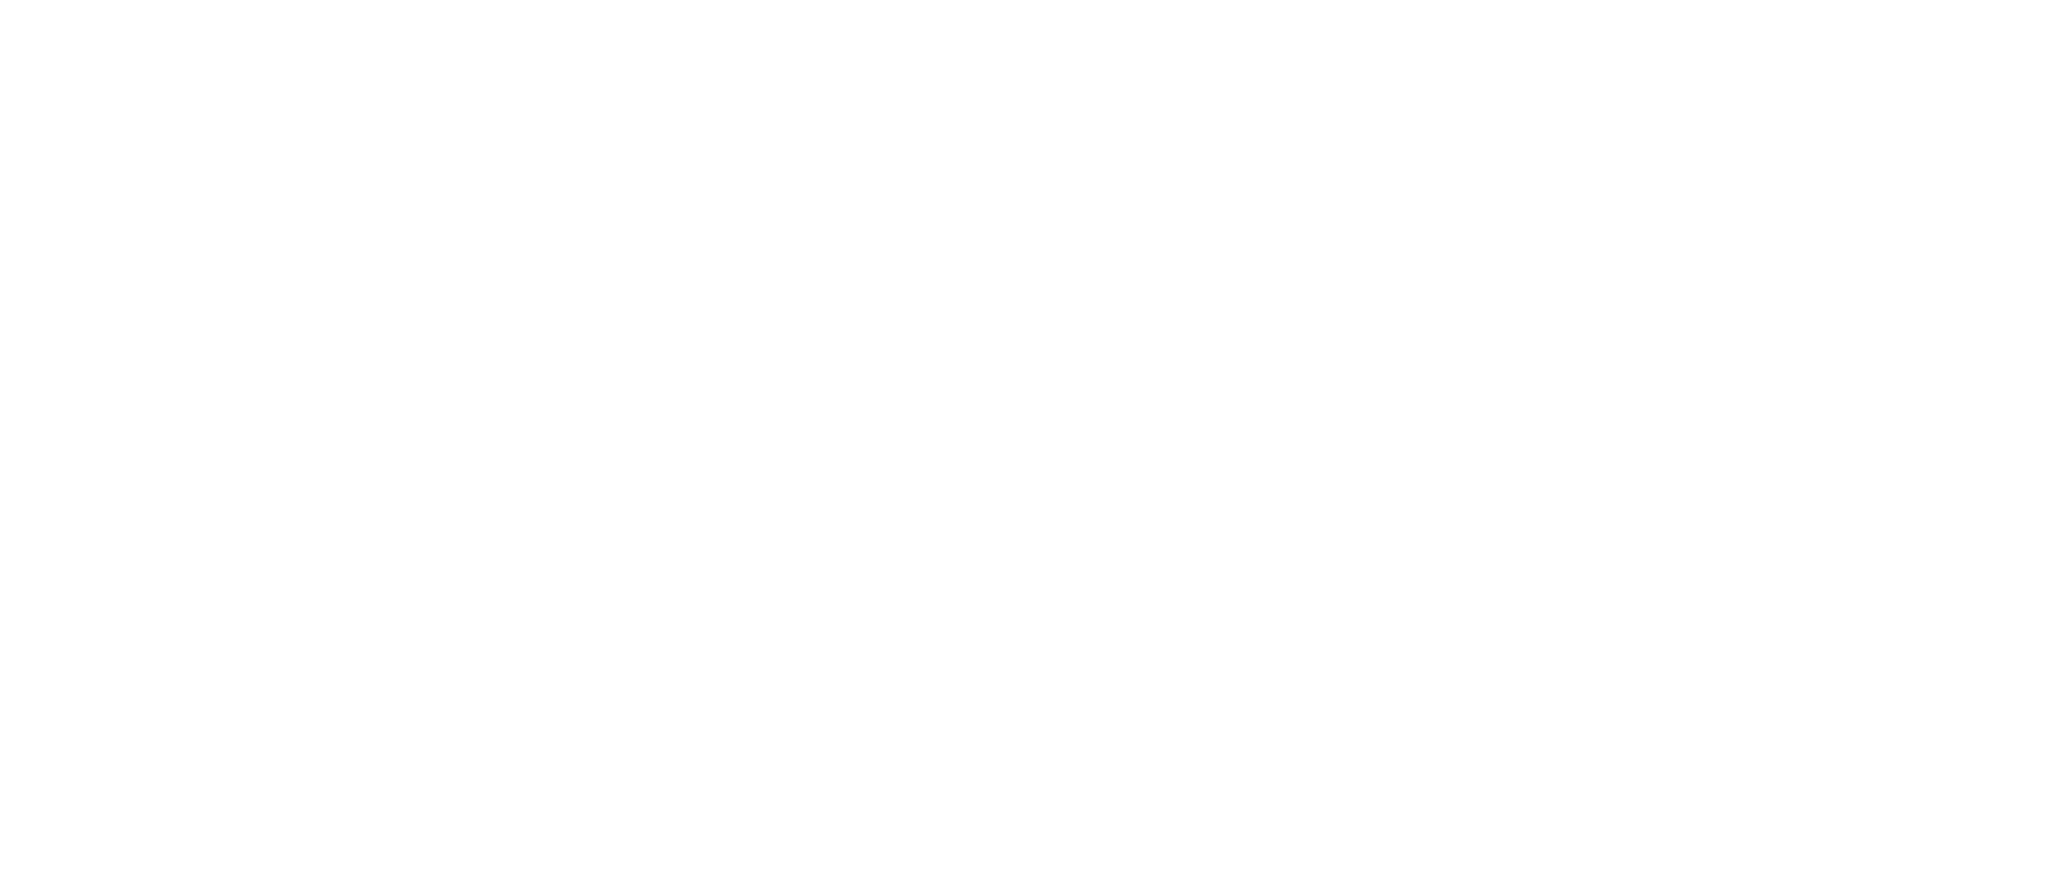 michael freas photography script logo